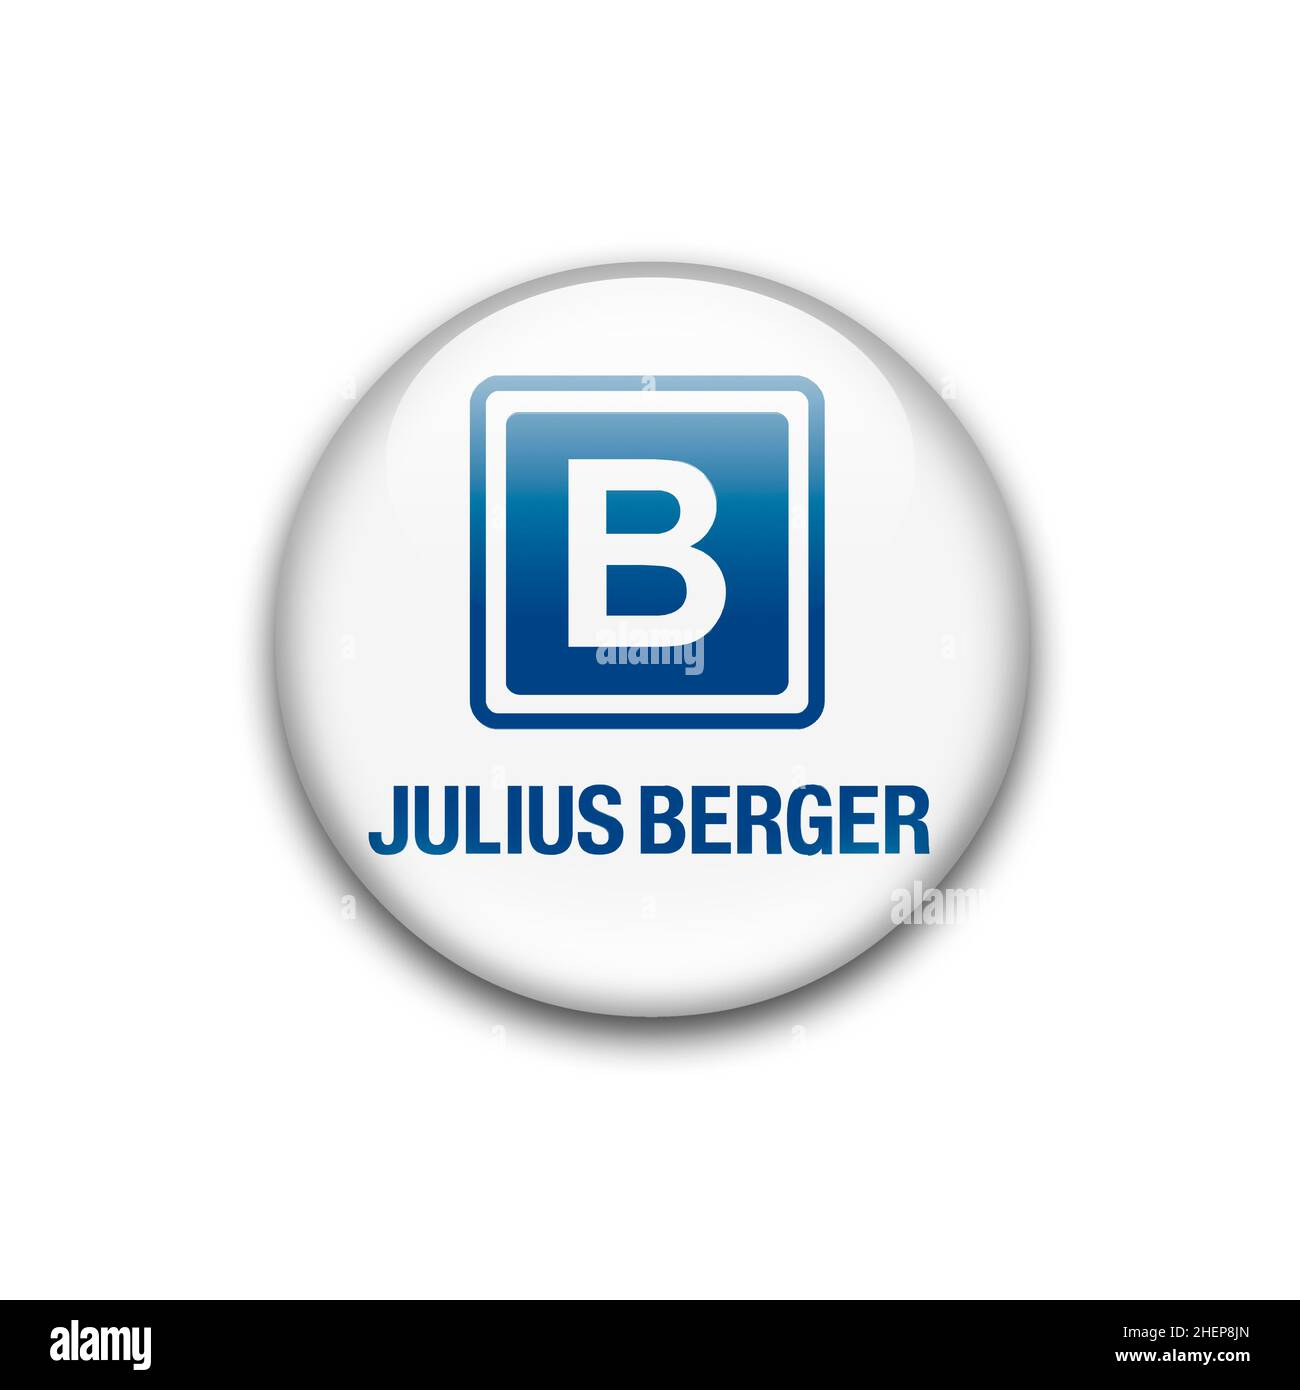 Julius berger hi-res stock photography and images - Alamy